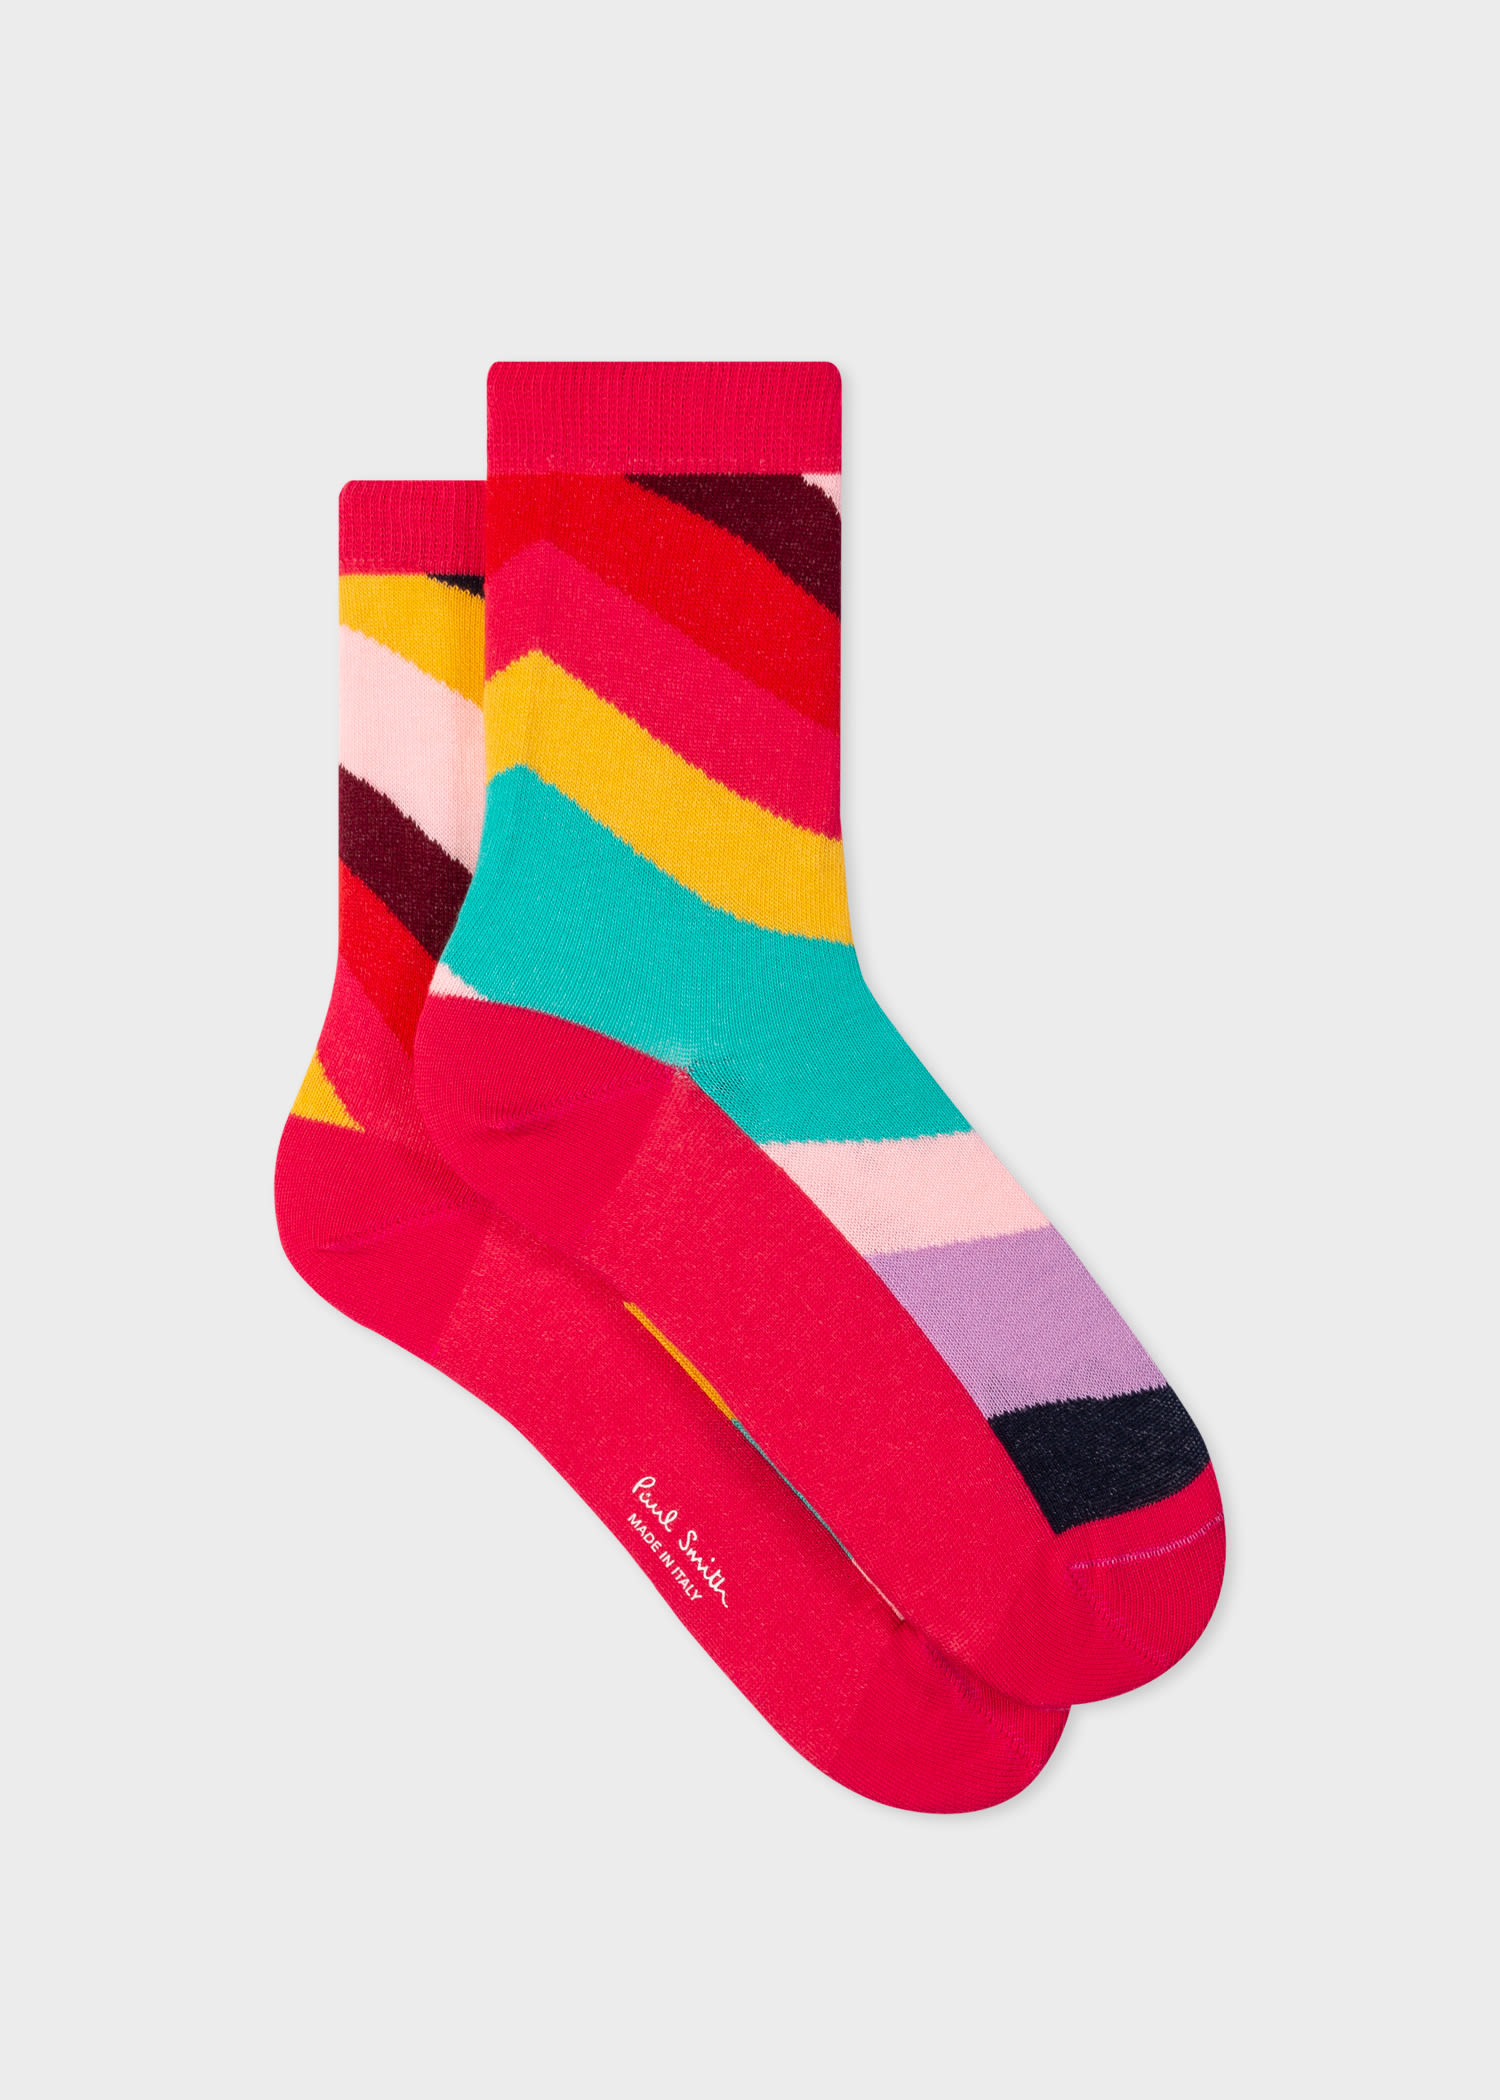 Paul Smith Women's 'swirl' Odd Socks Multicolour